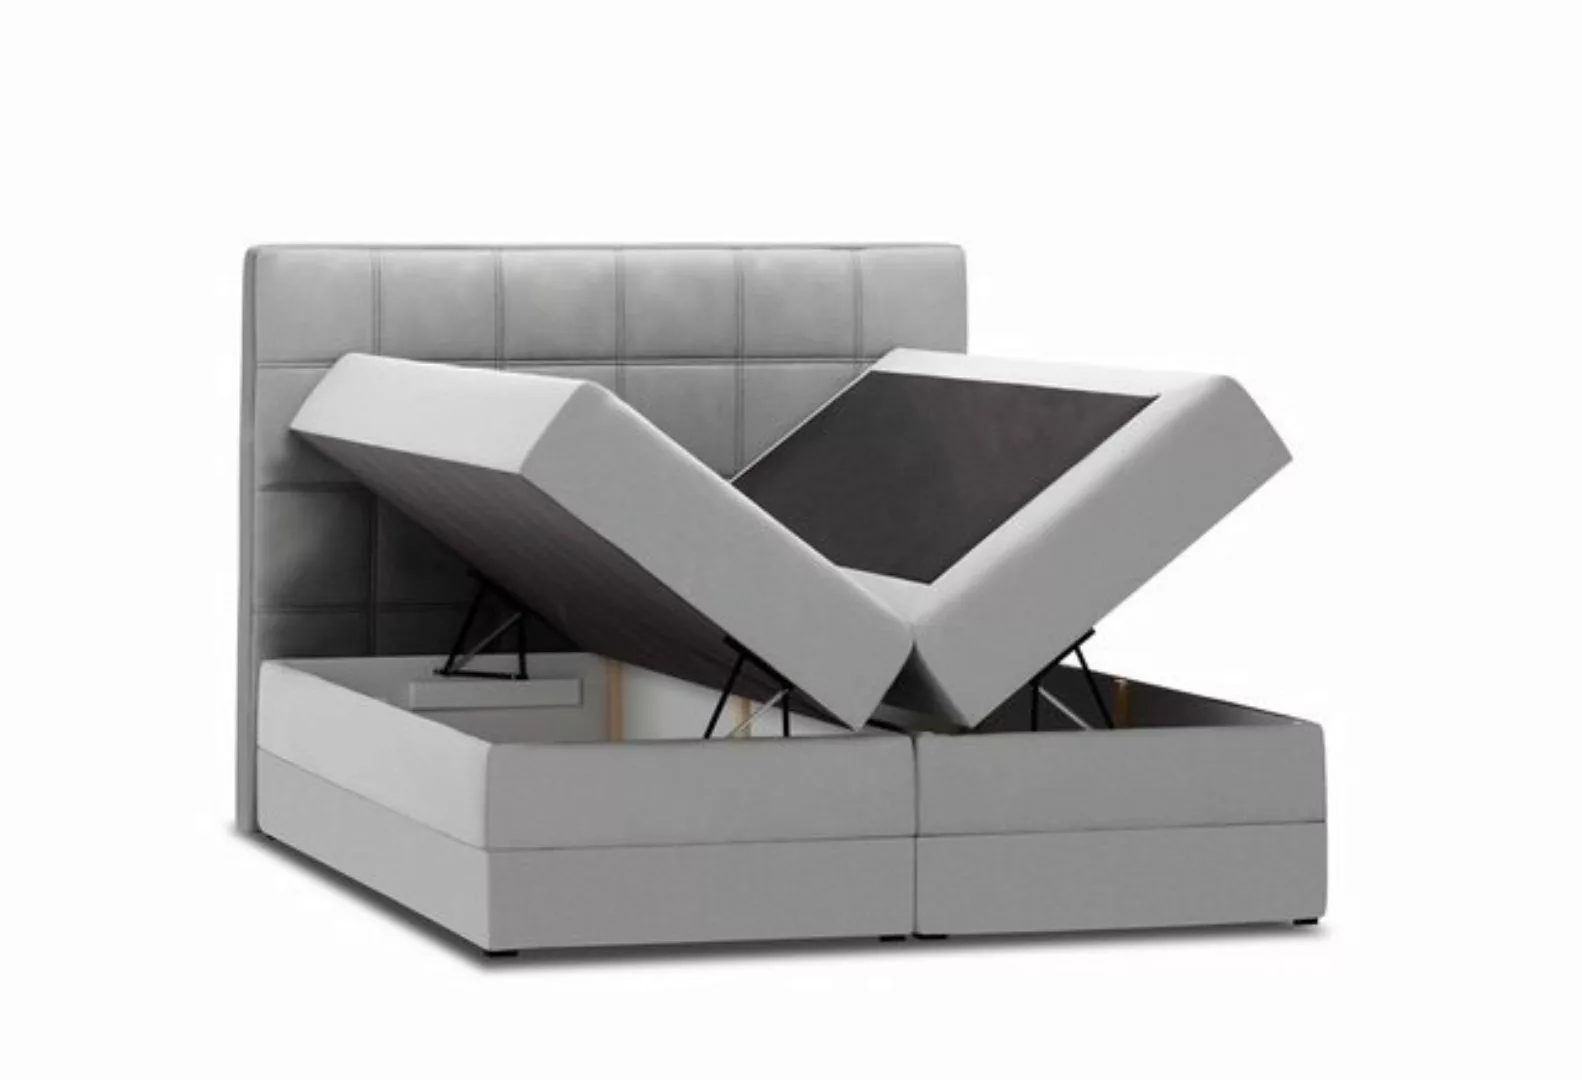 99rooms Boxspringbett Minor (Schlafzimmerbett, Bett), Design günstig online kaufen